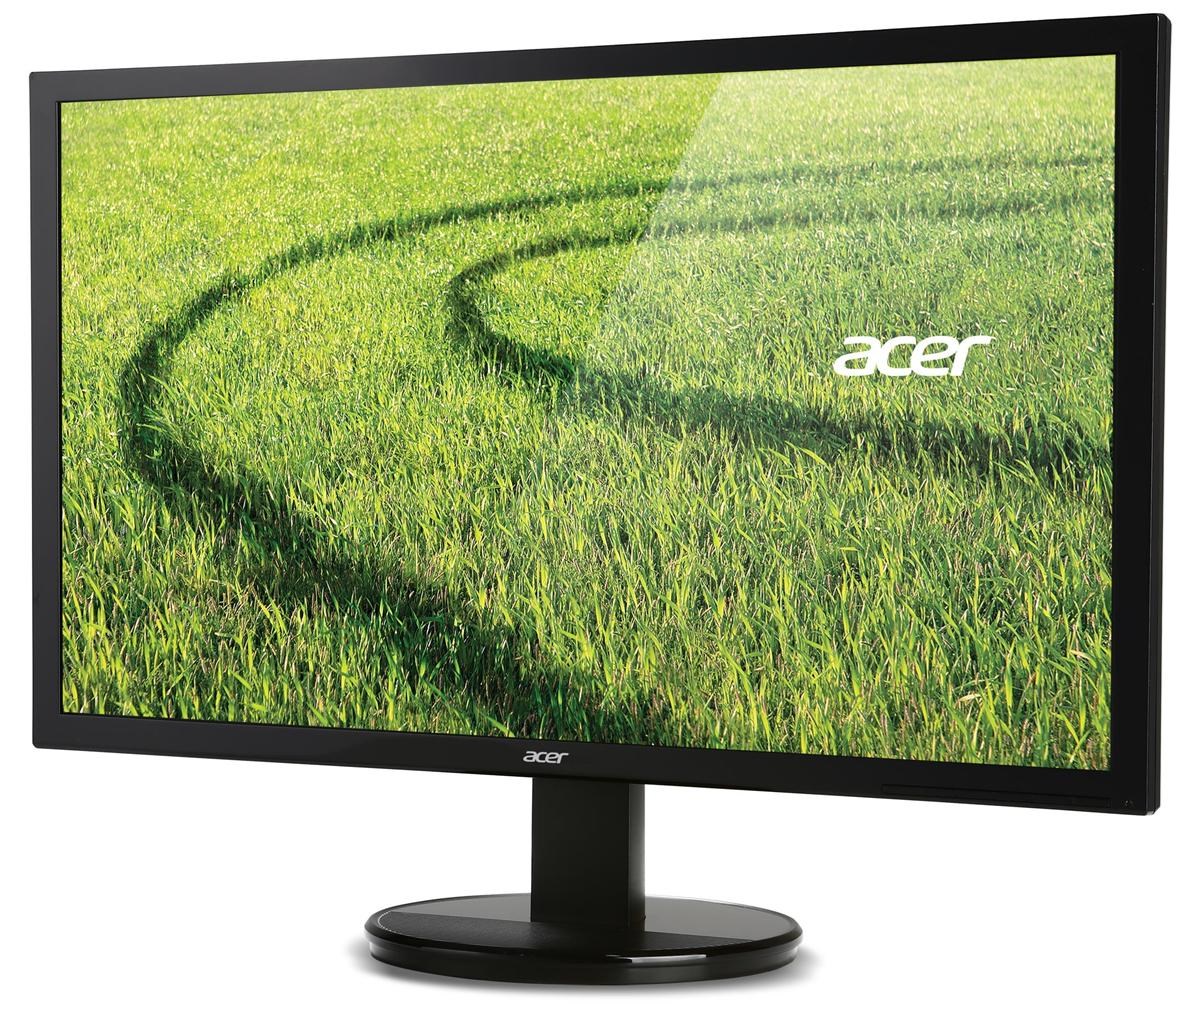 Acer K222hqlbd 215 Inch Full Hd Tn Film Led Backlit Monitor 100m1